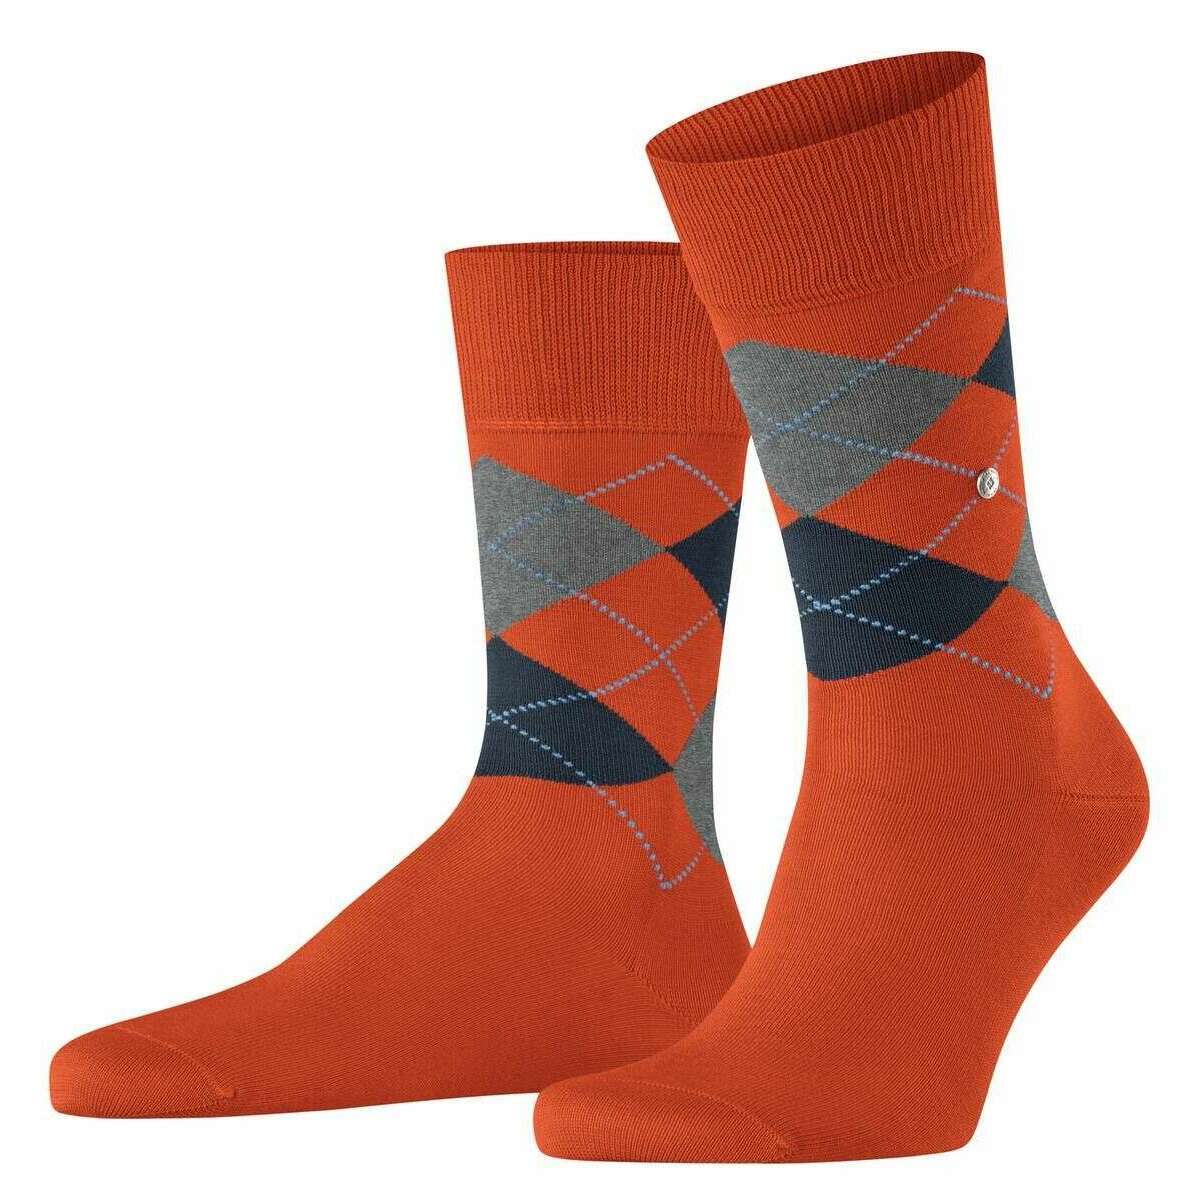 Burlington Manchester Socks - Ziegel Orange